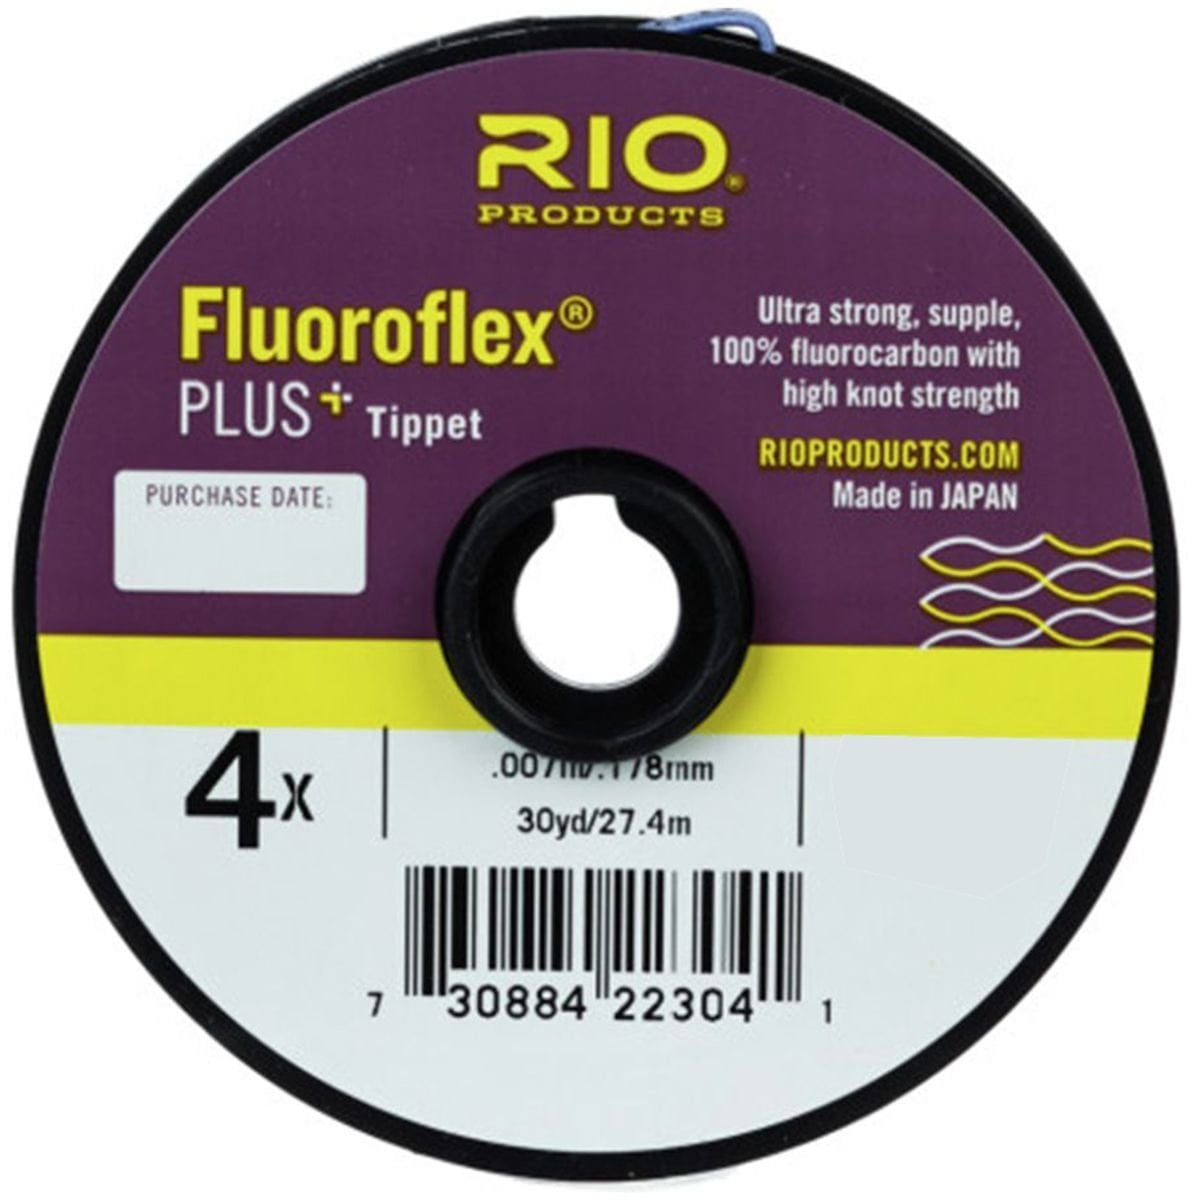 New 2021 STOCK * Rio® Fluroflex® PLUS Tippet 30 Yard Spools FLUOROCARBON 